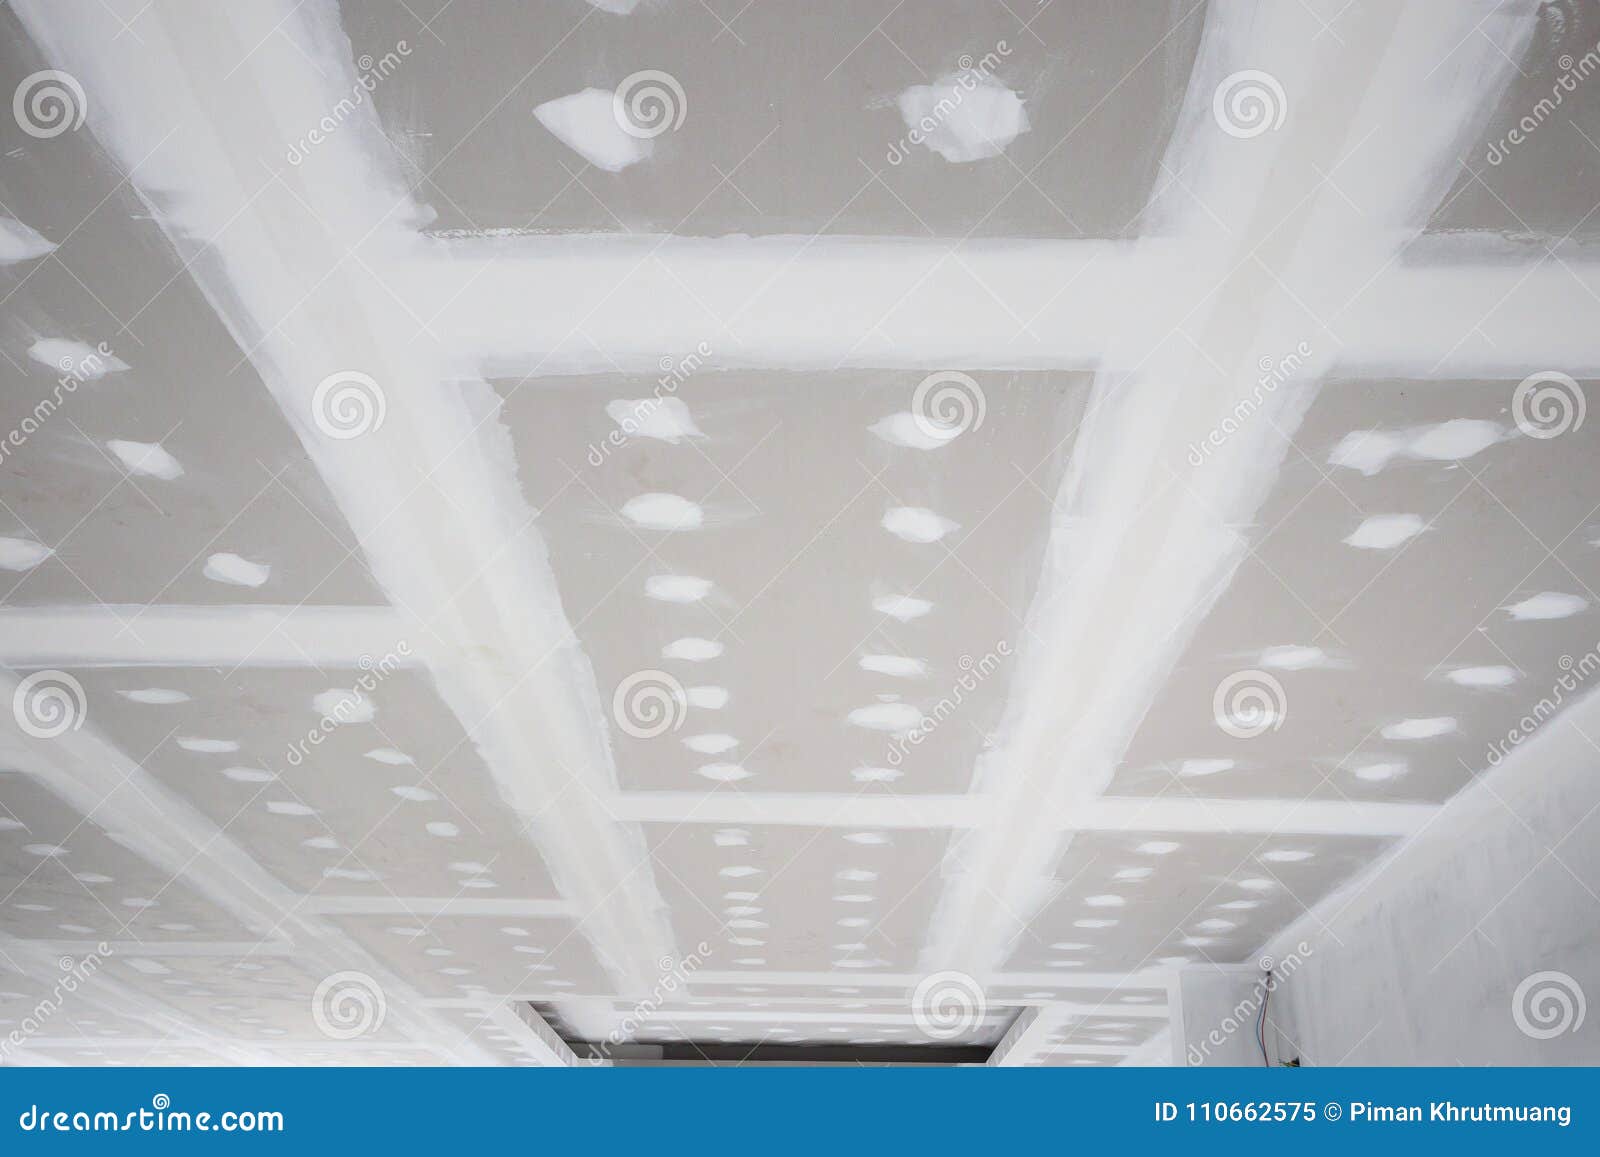 Ceiling Gypsum Board Installation Stock Image Image Of